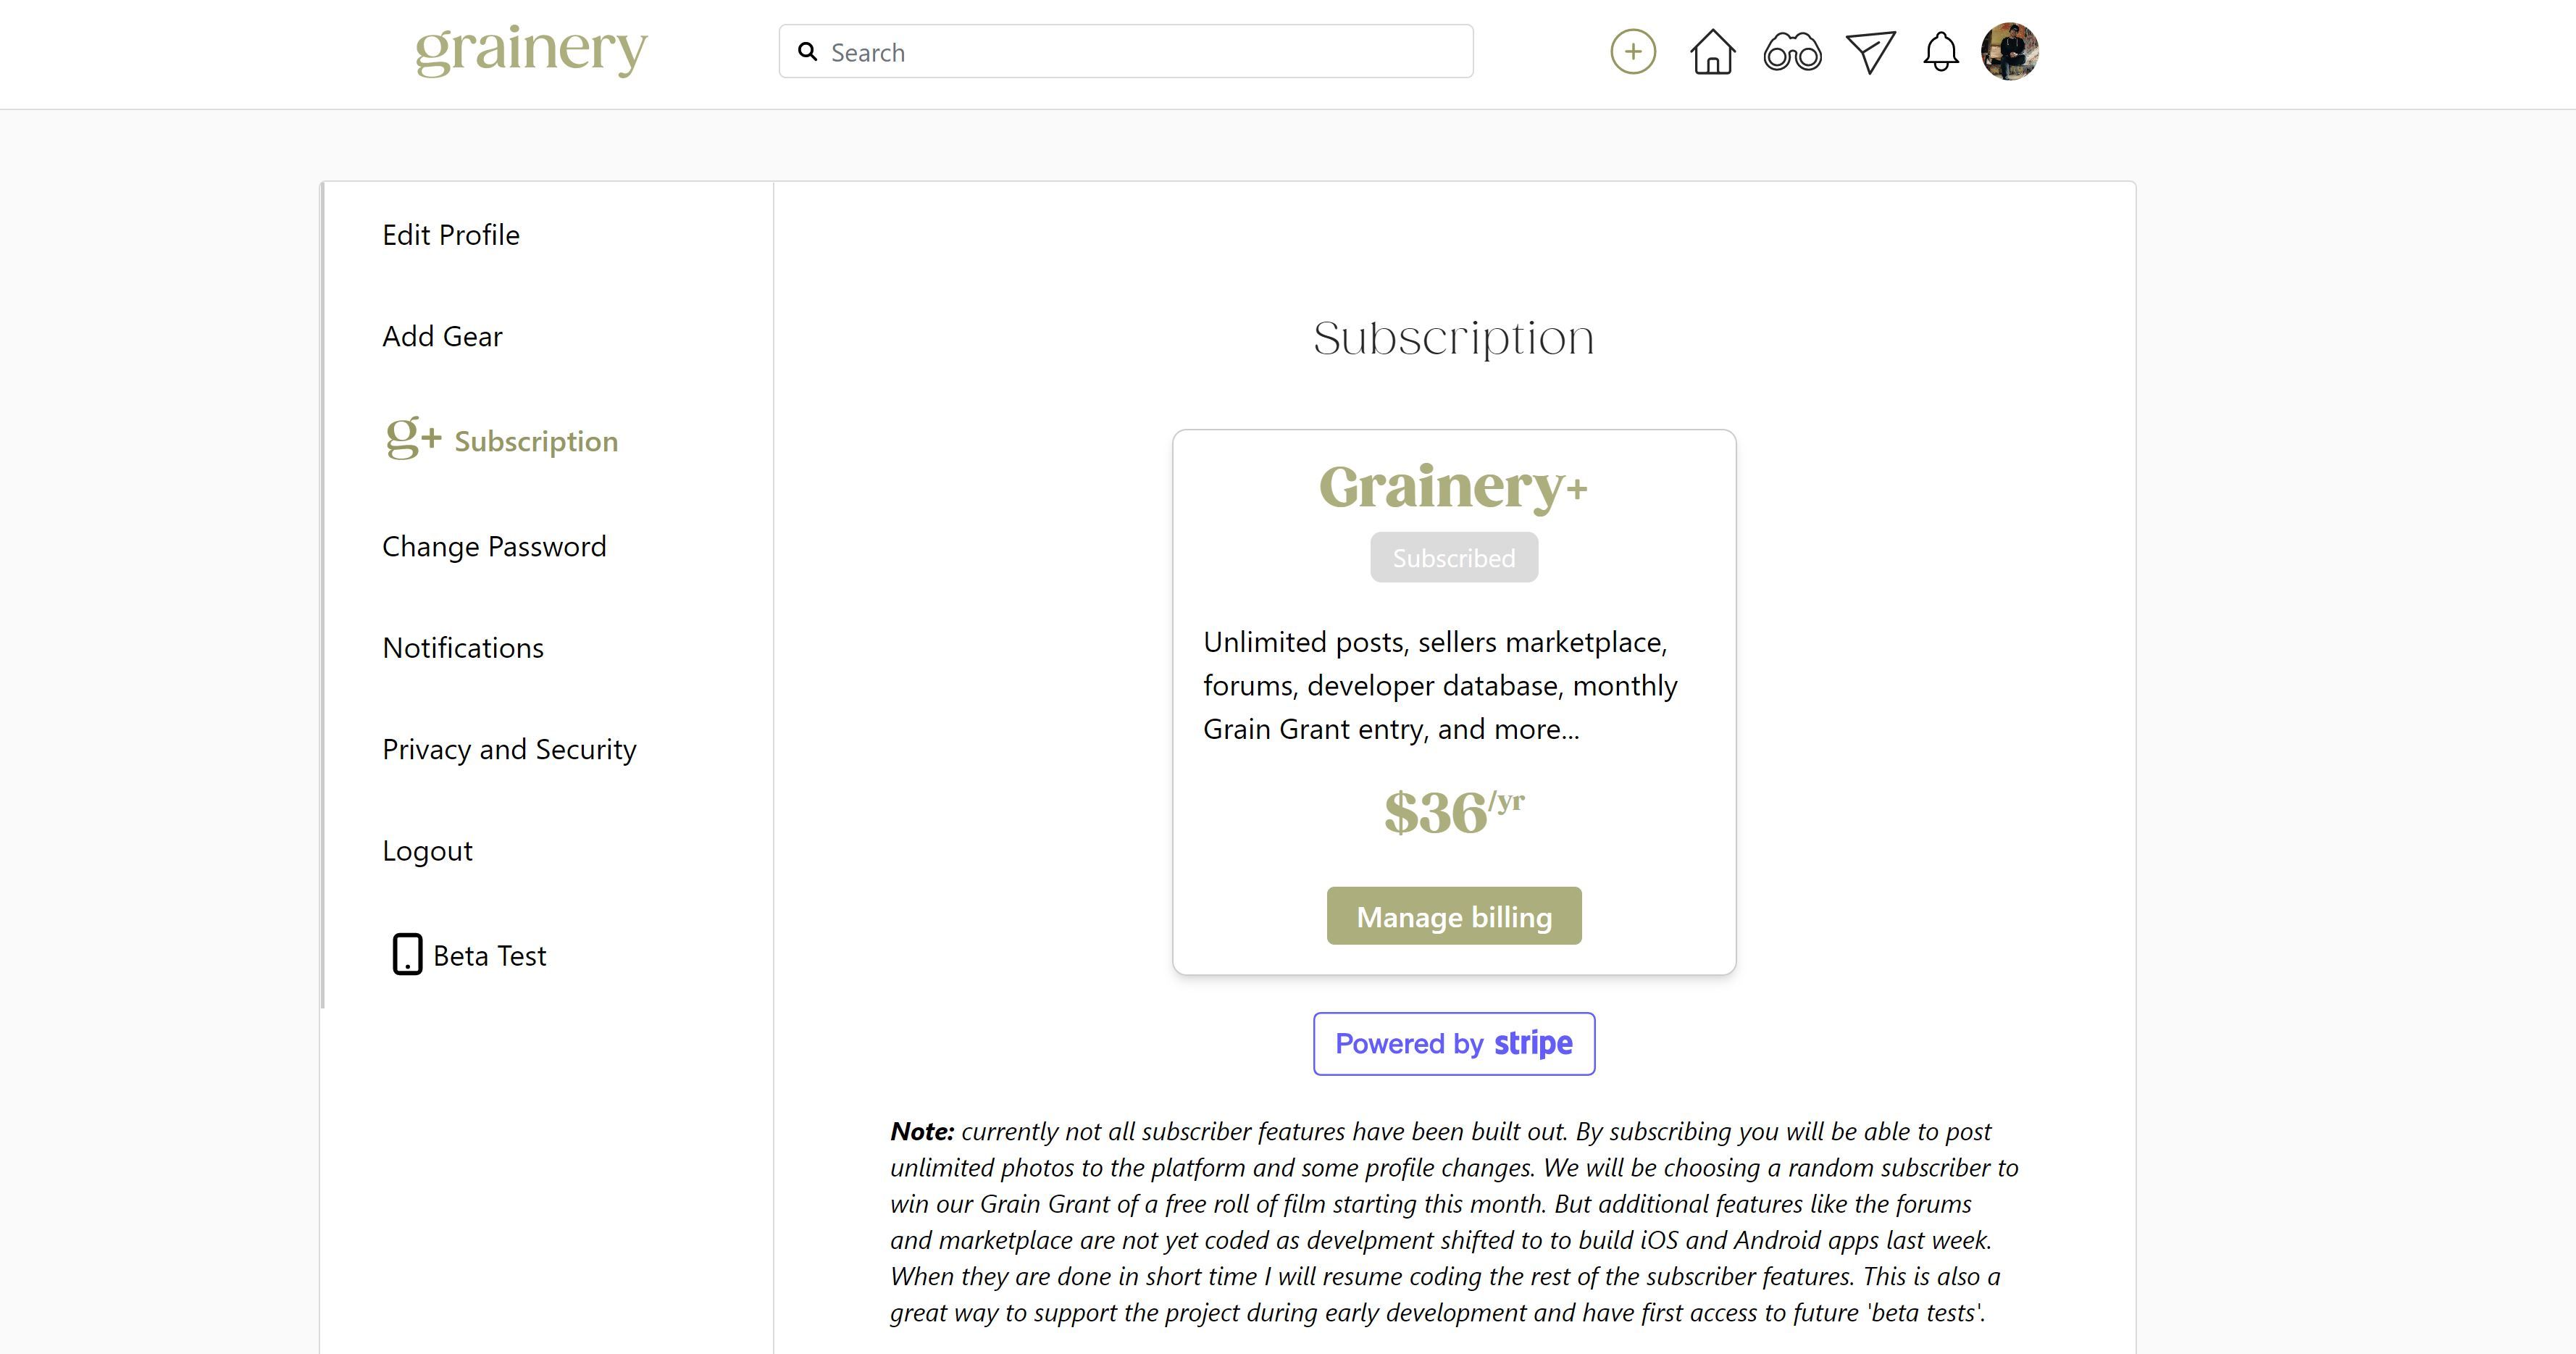 grainery+ plus subscription membership information page in profile settings desktop site